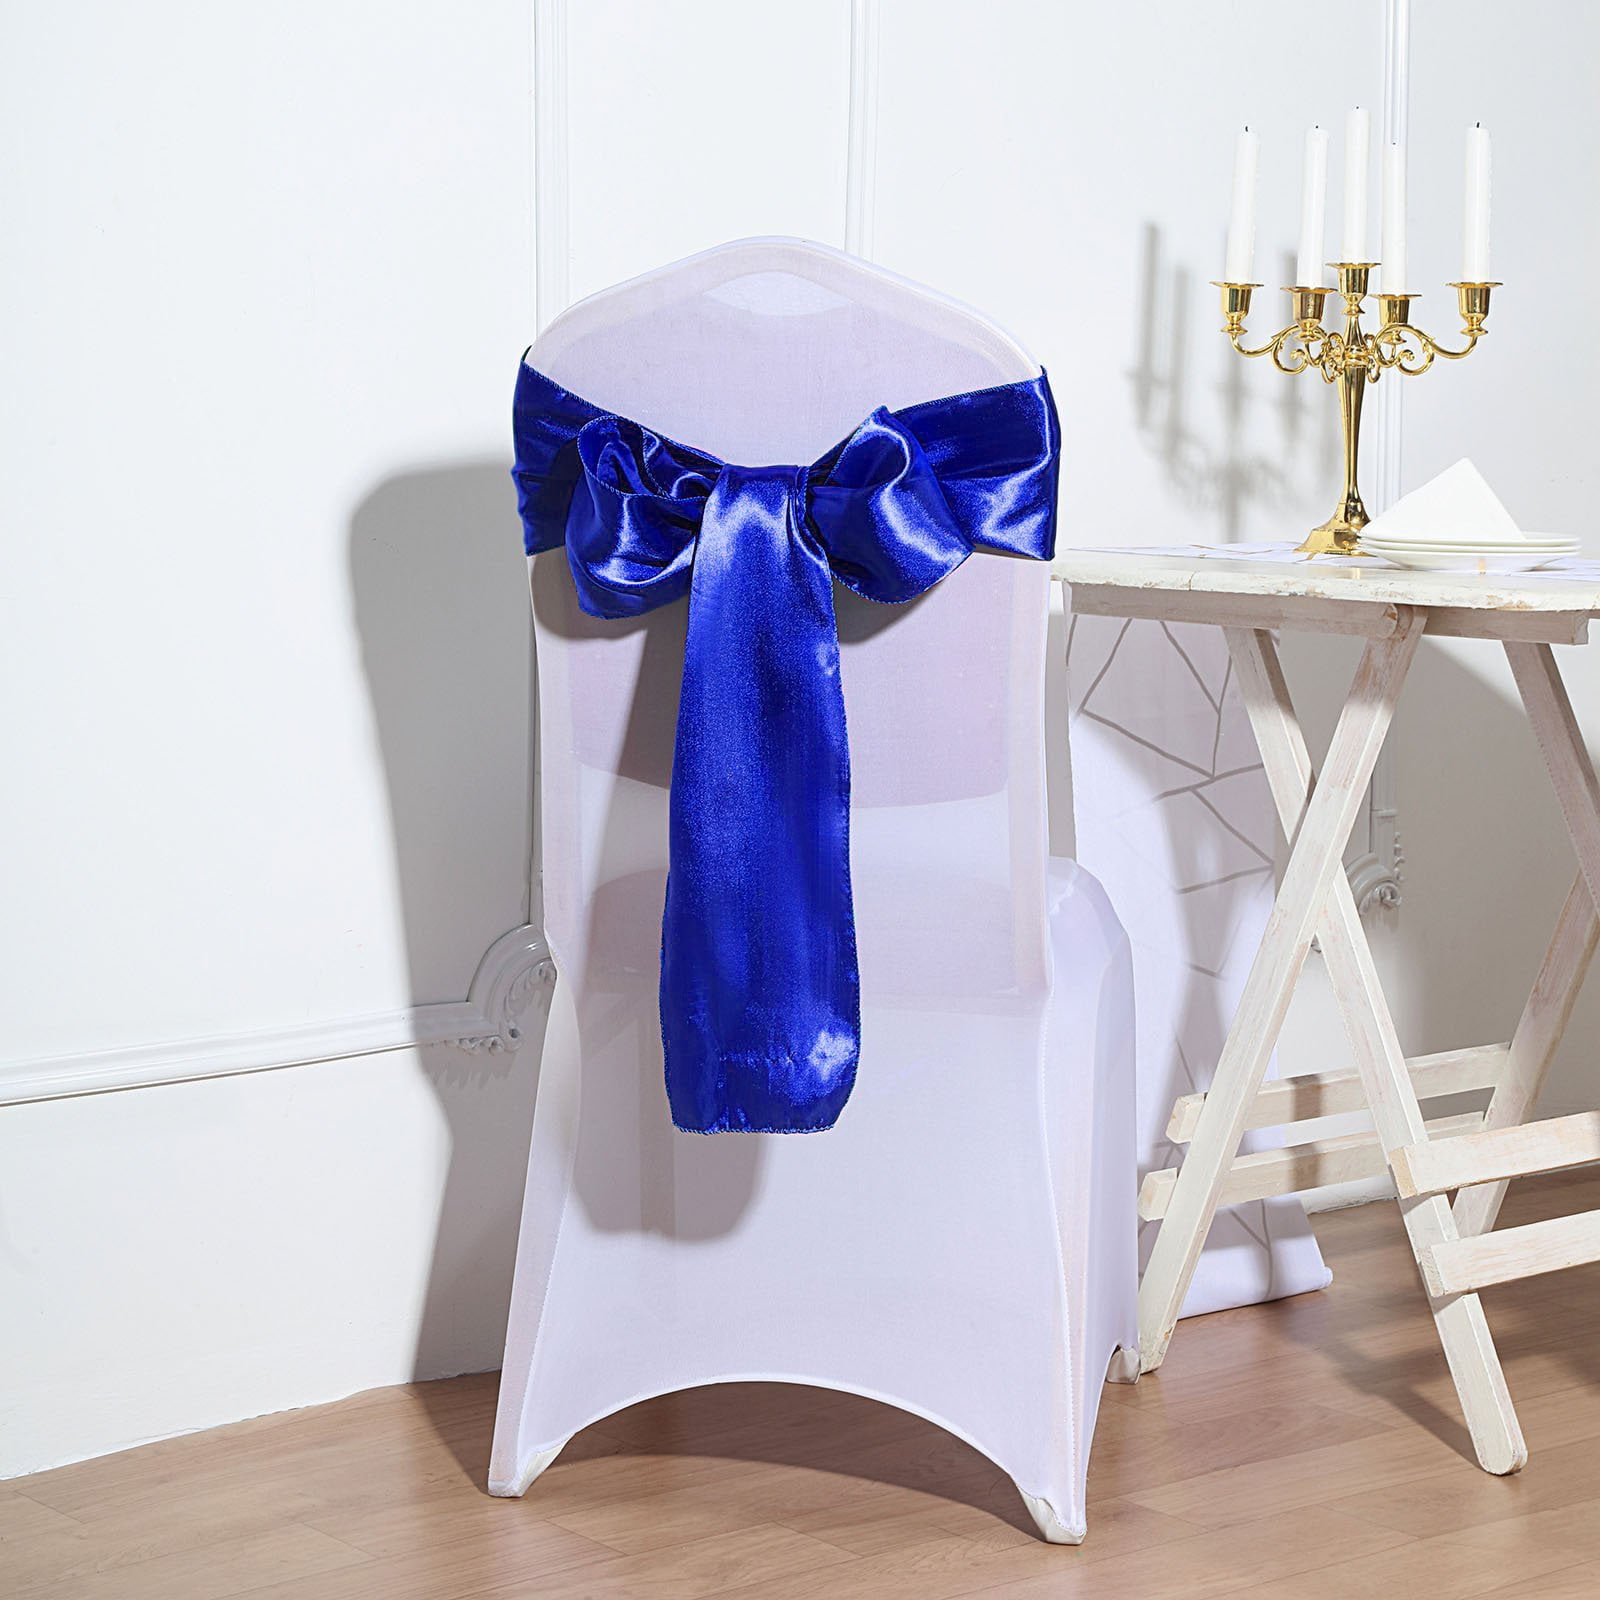 25pc Satin Chair Cover Sash Bow Sashes Wedding Banquet decor FREE SHIPPING 